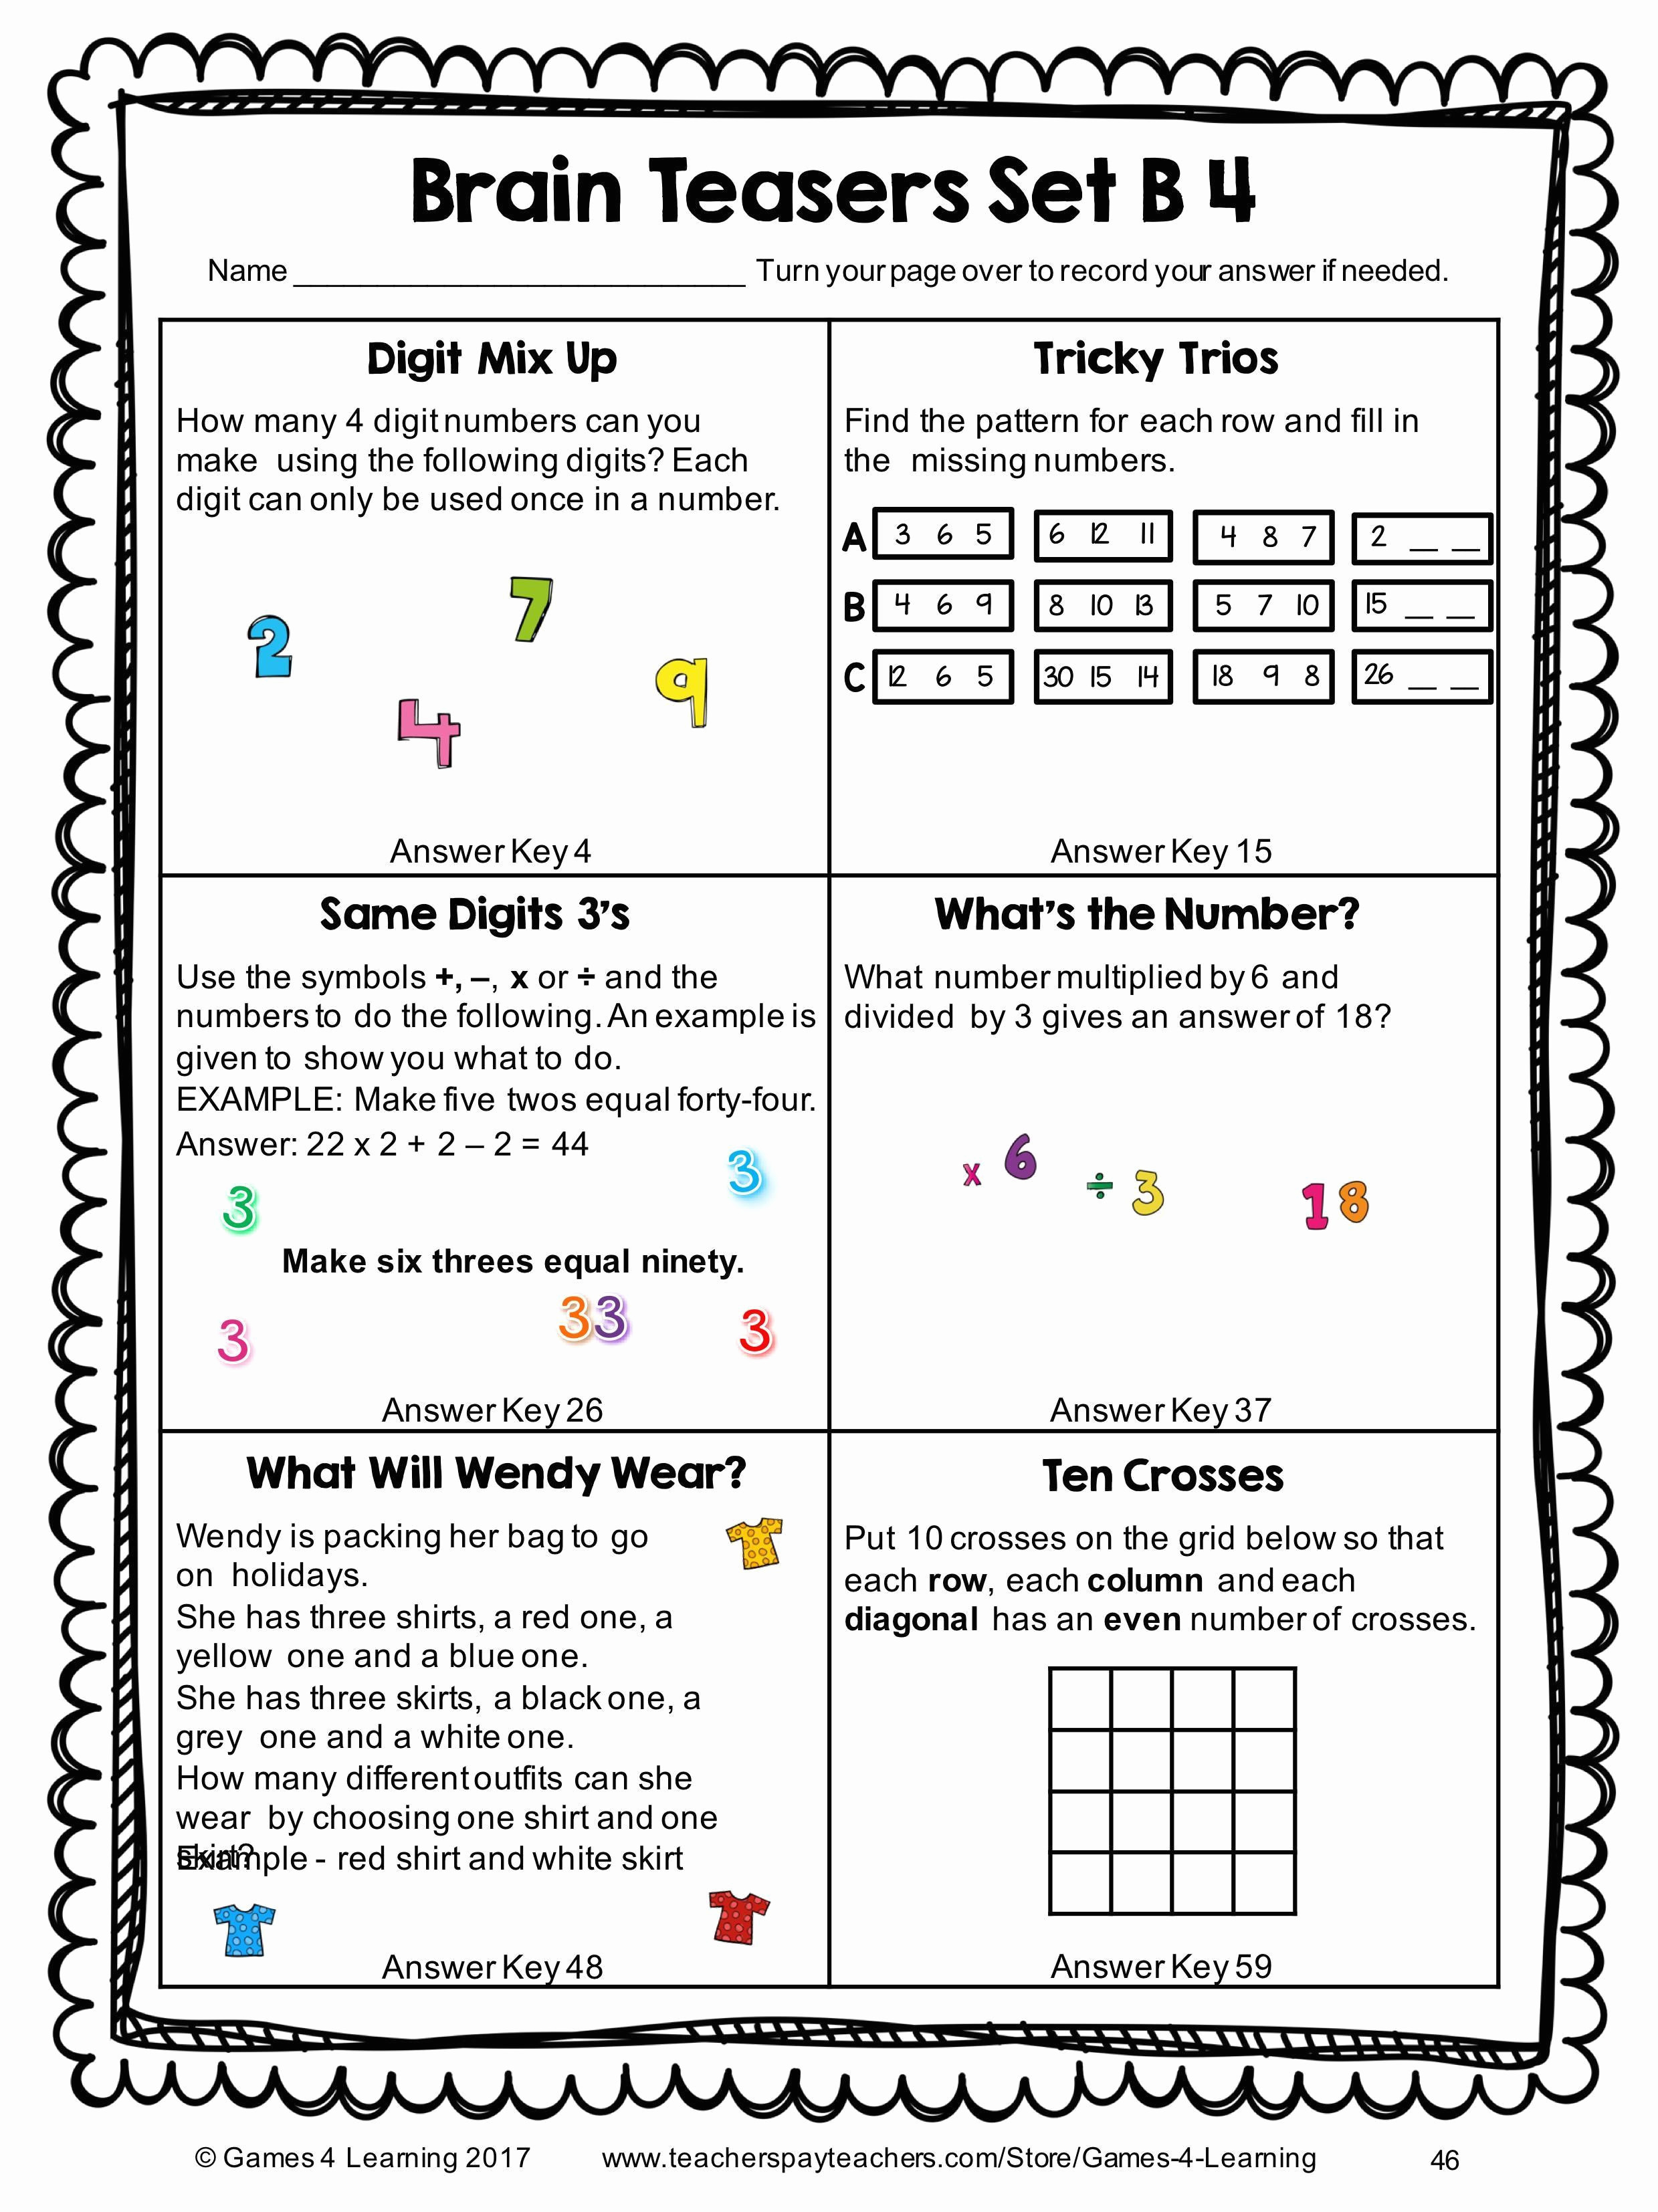 Brain Teasers Printable Worksheets 6th Grade Brain Teasers Worksheets